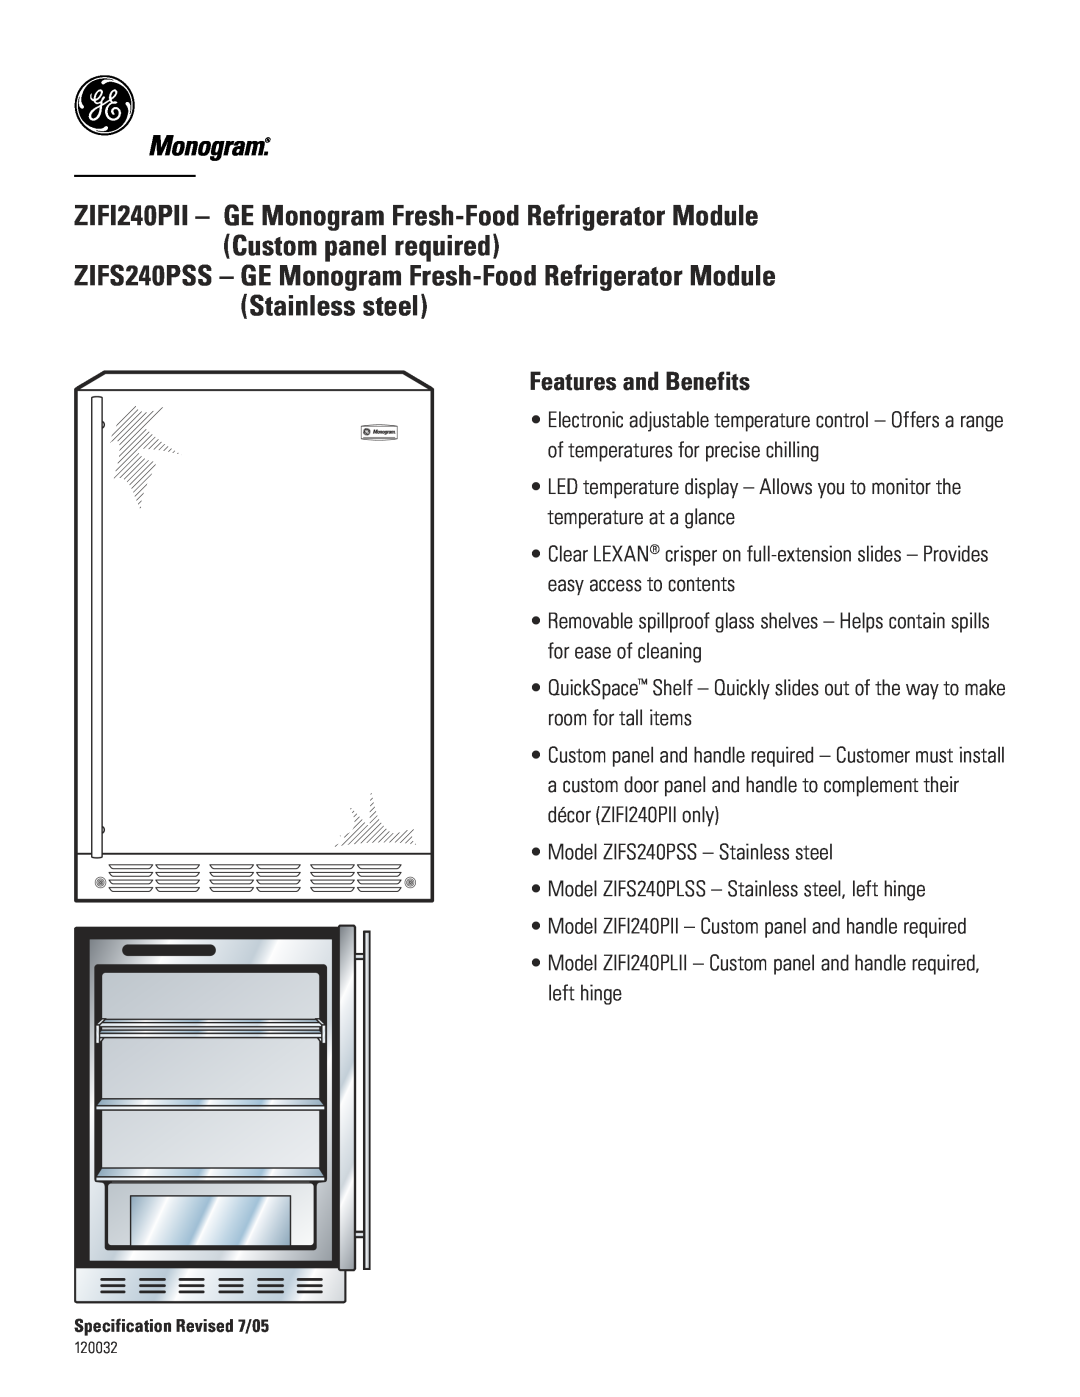 GE ZIFS240PSS dimensions ZIFI240PII - GE Monogram Fresh-Food Refrigerator Module, Custom panel required, Stainless steel 